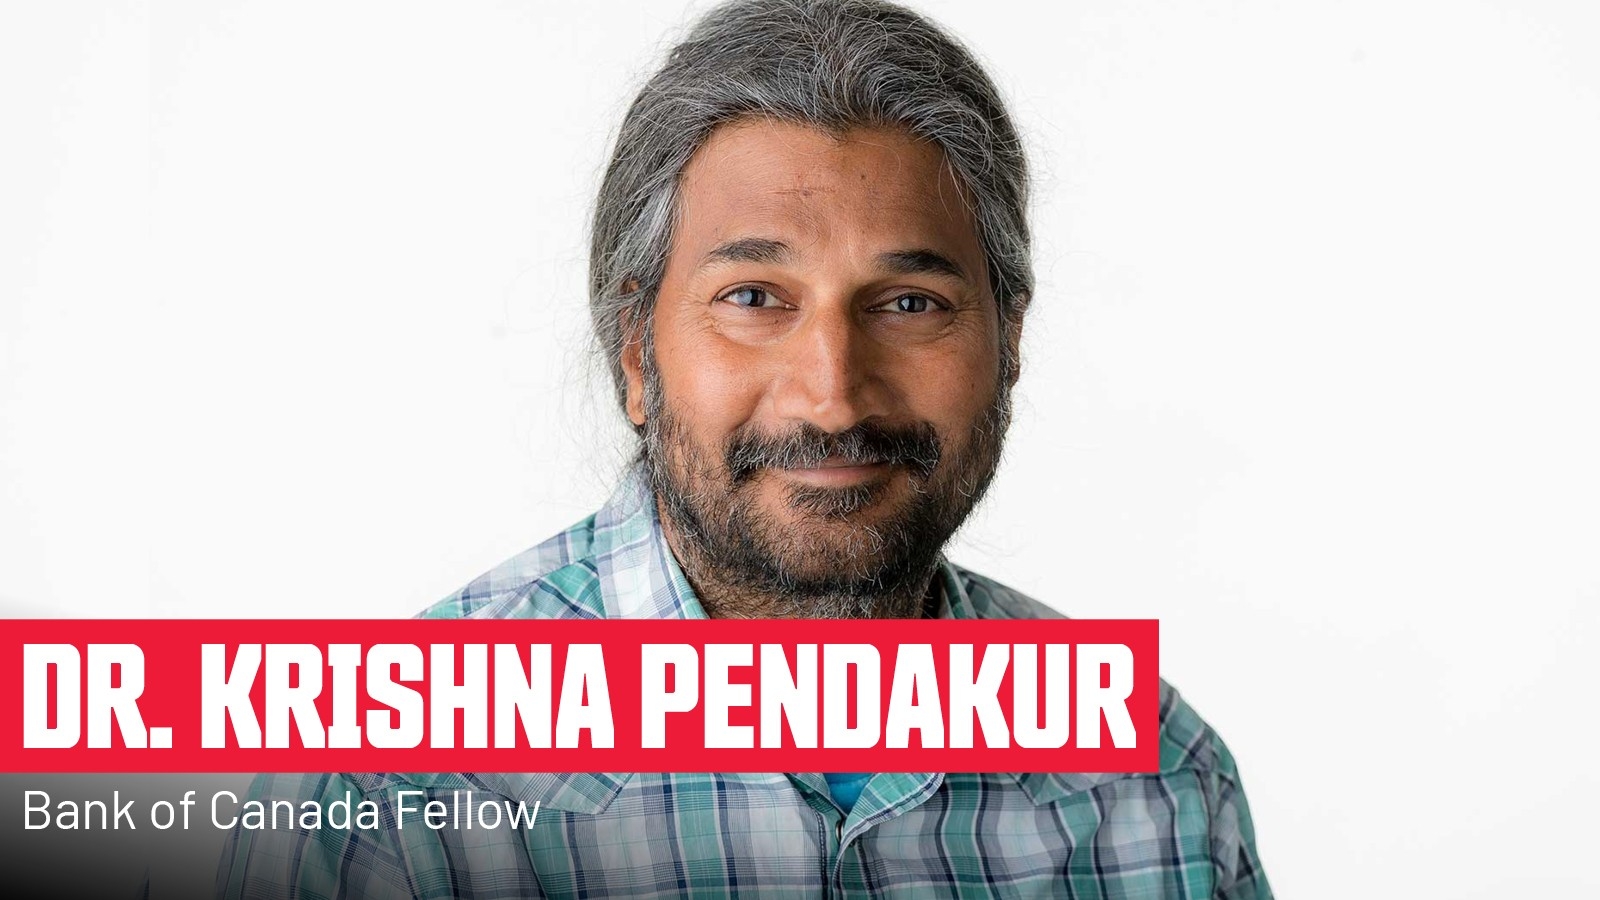 Krishna Pendakur, SFU Economics professor, and new Bank of Canada Fellow